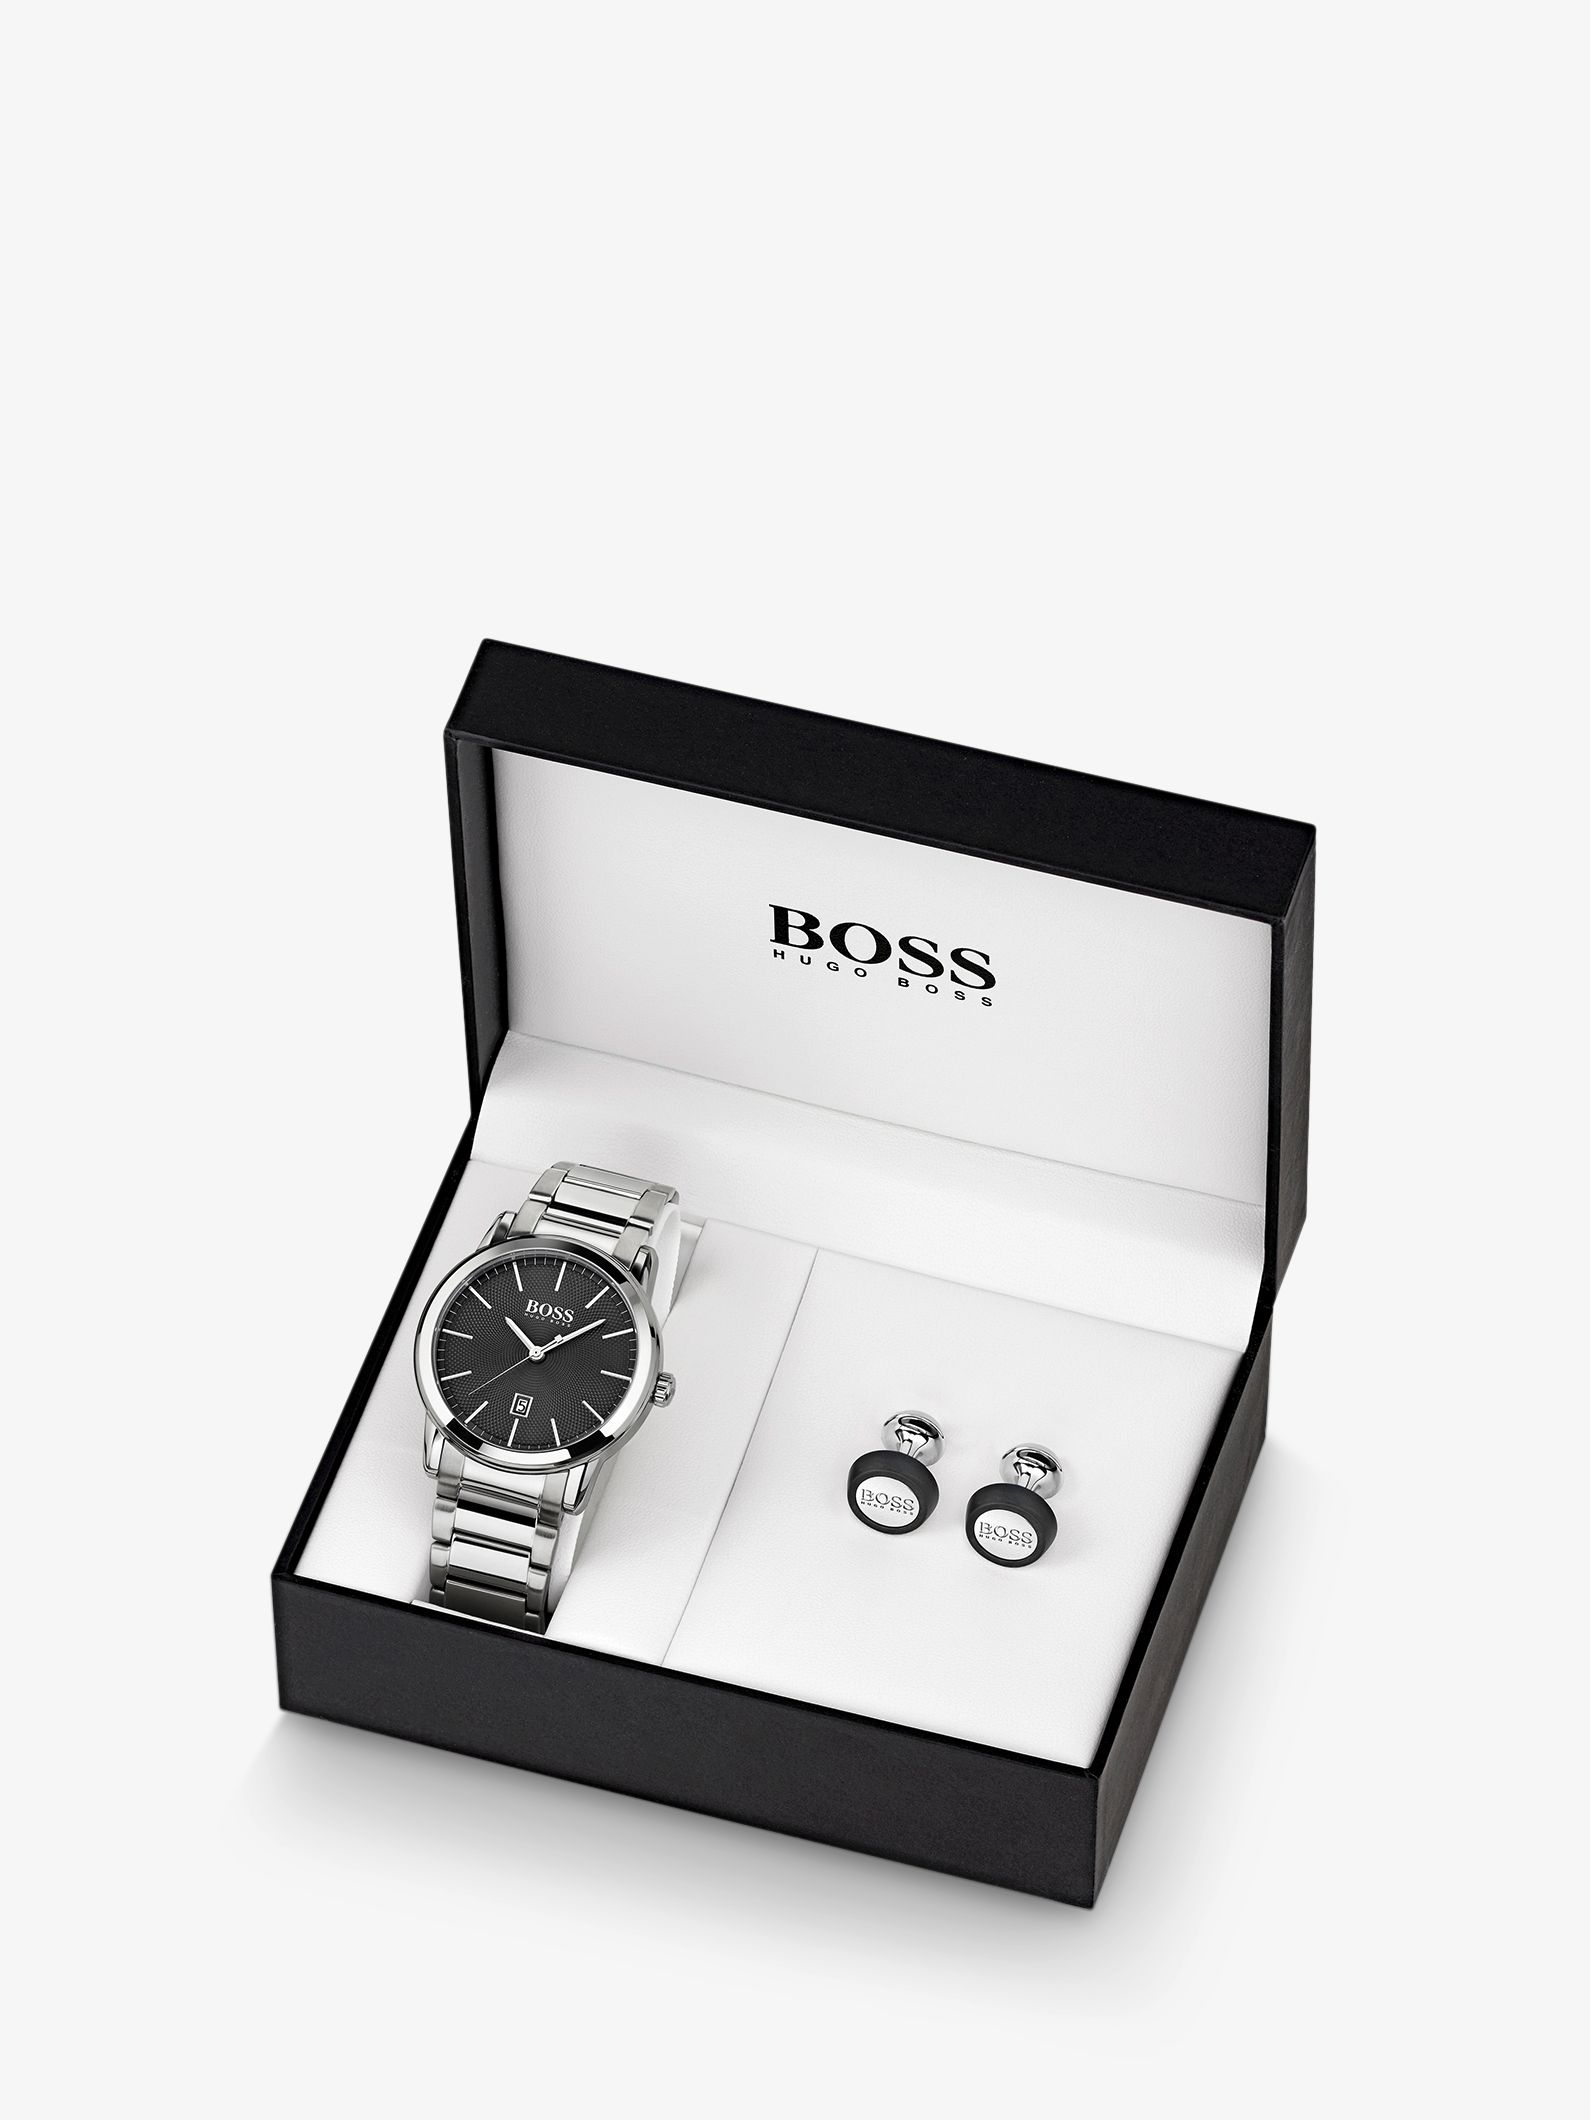 hugo boss black and silver watch